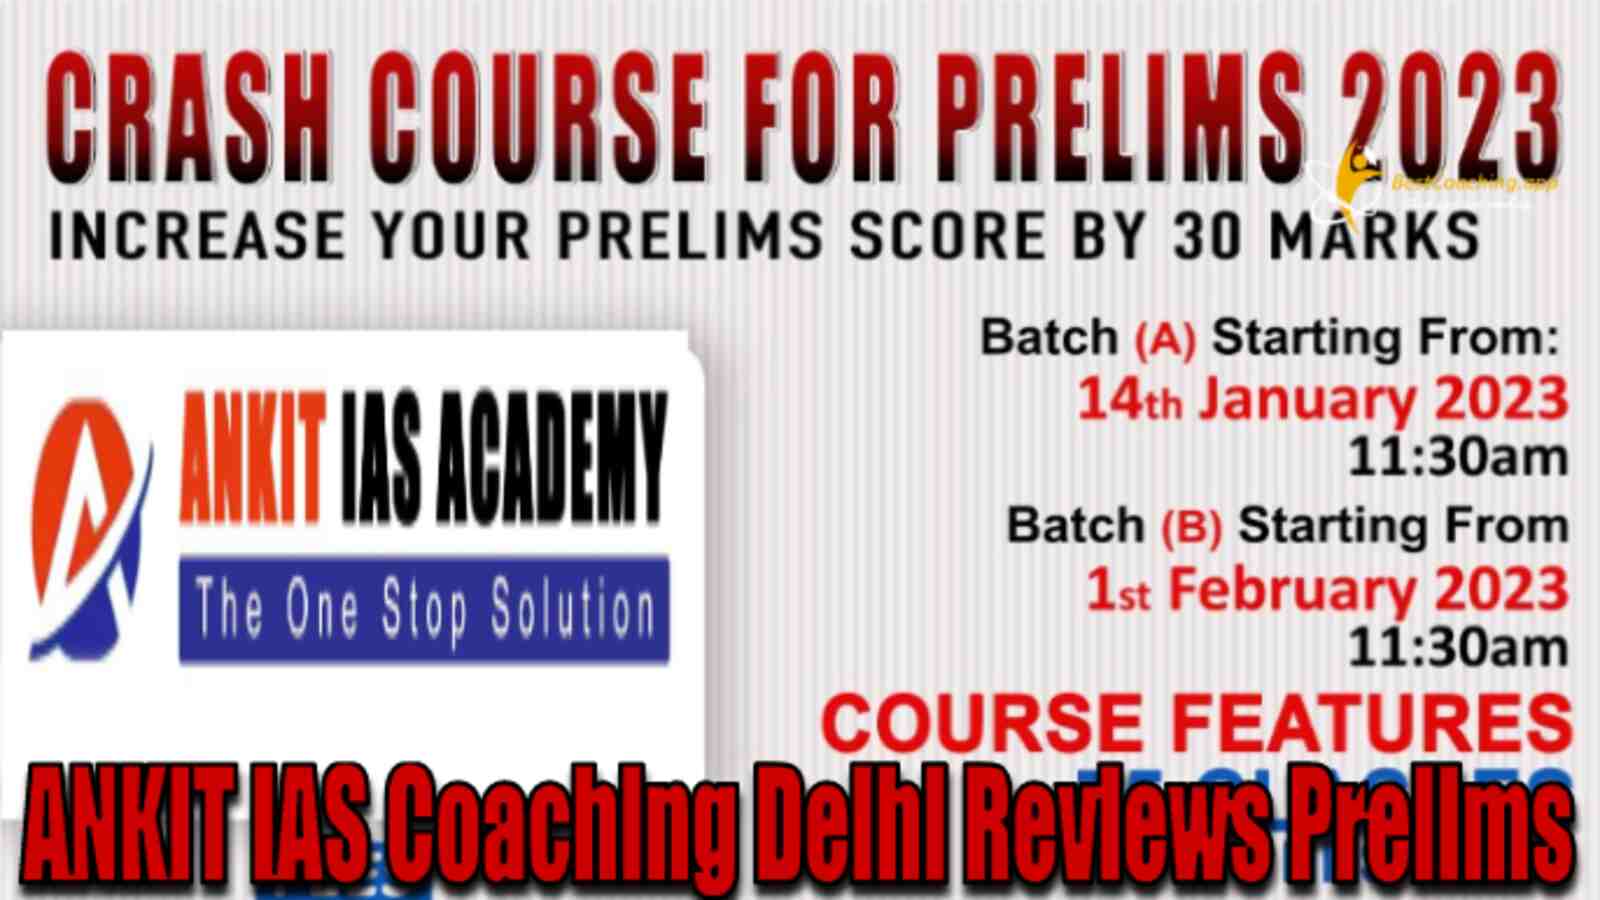 ANKIT IAS Coaching Delhi Review Prelims